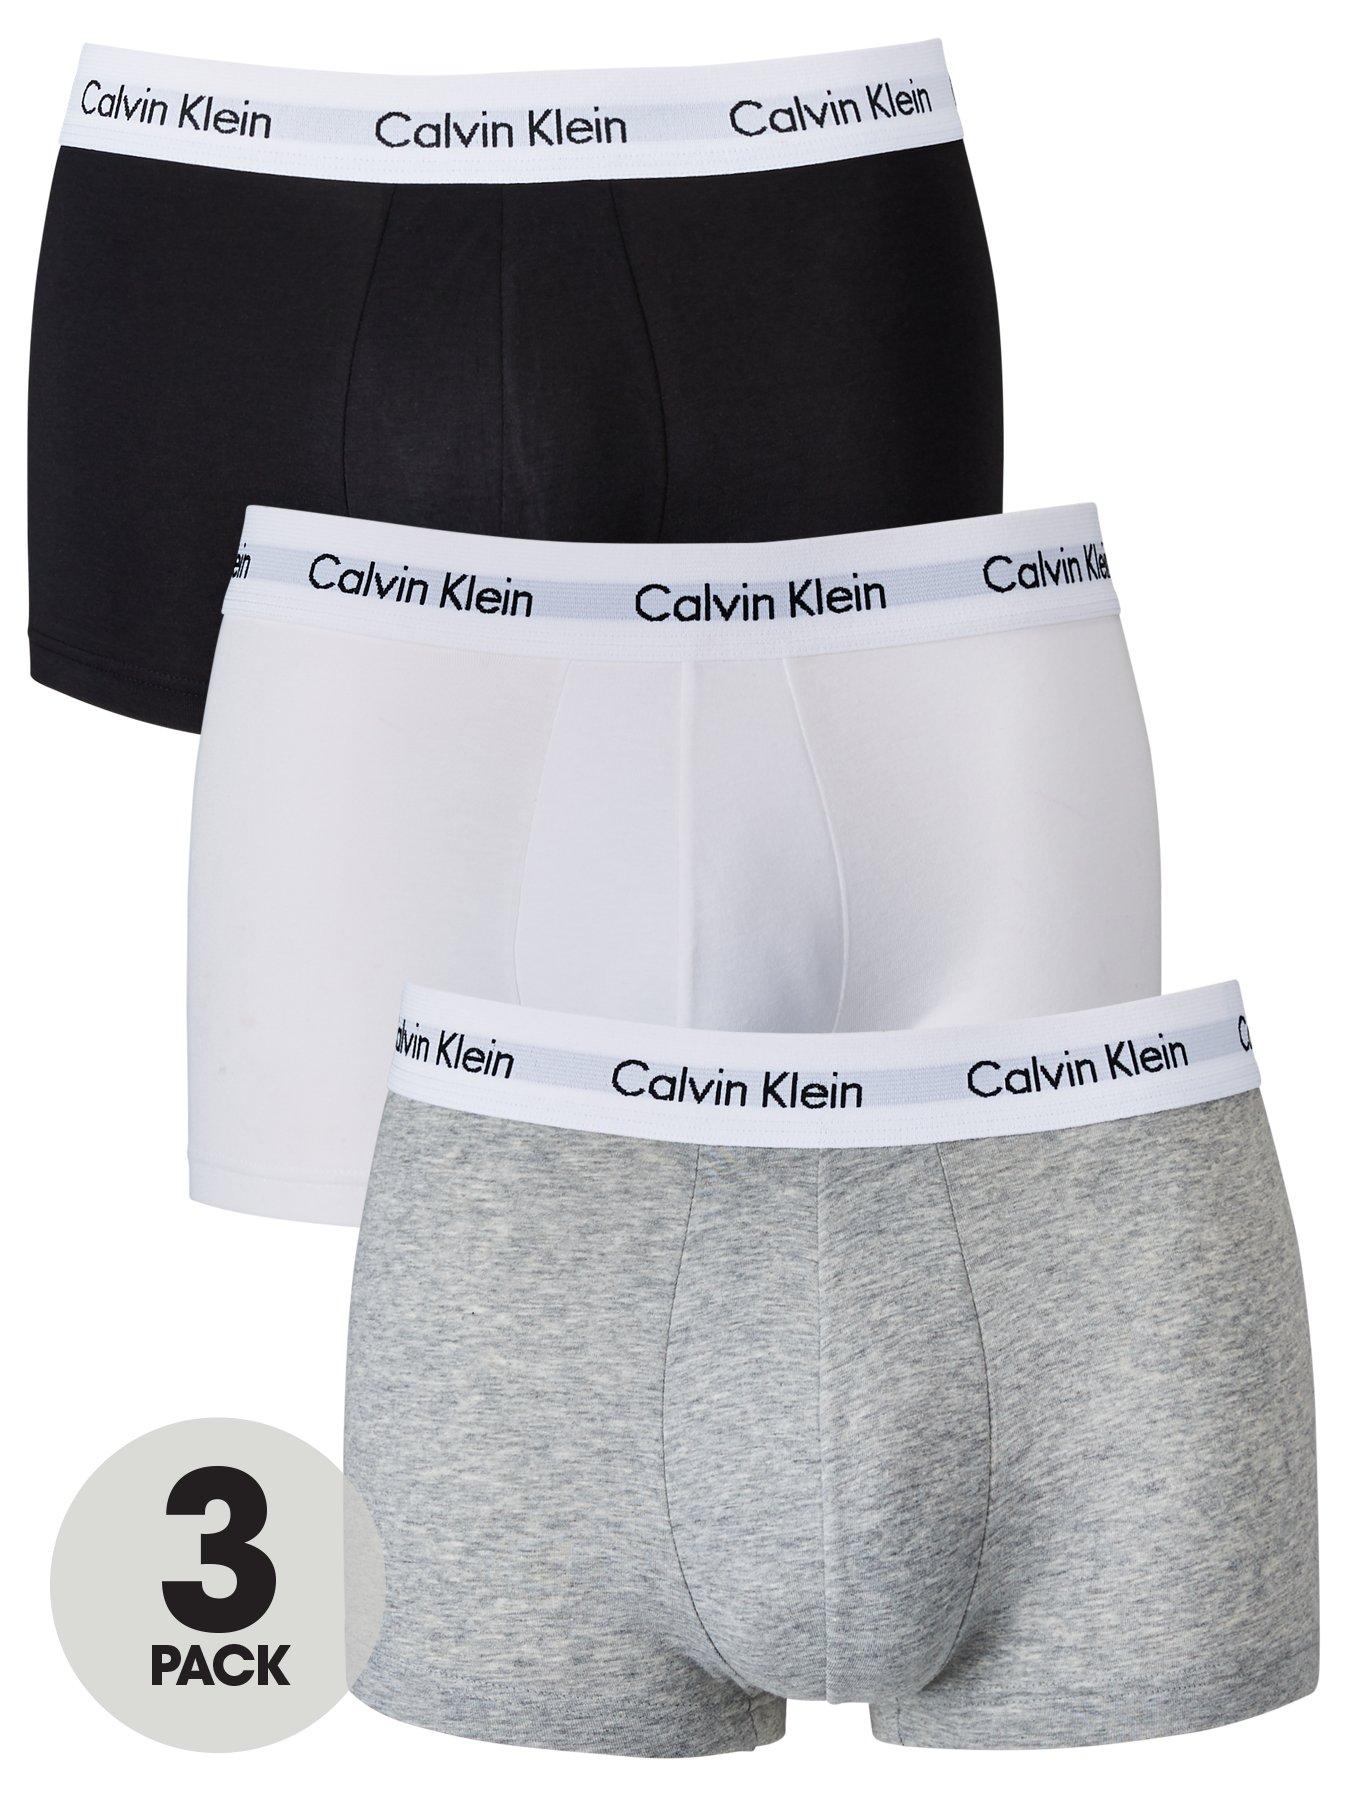 3 Pack CALVIN KLEIN Men CLASSIC Low Rise Briefs Cotton BLACK SMALL XXLARGE  $46